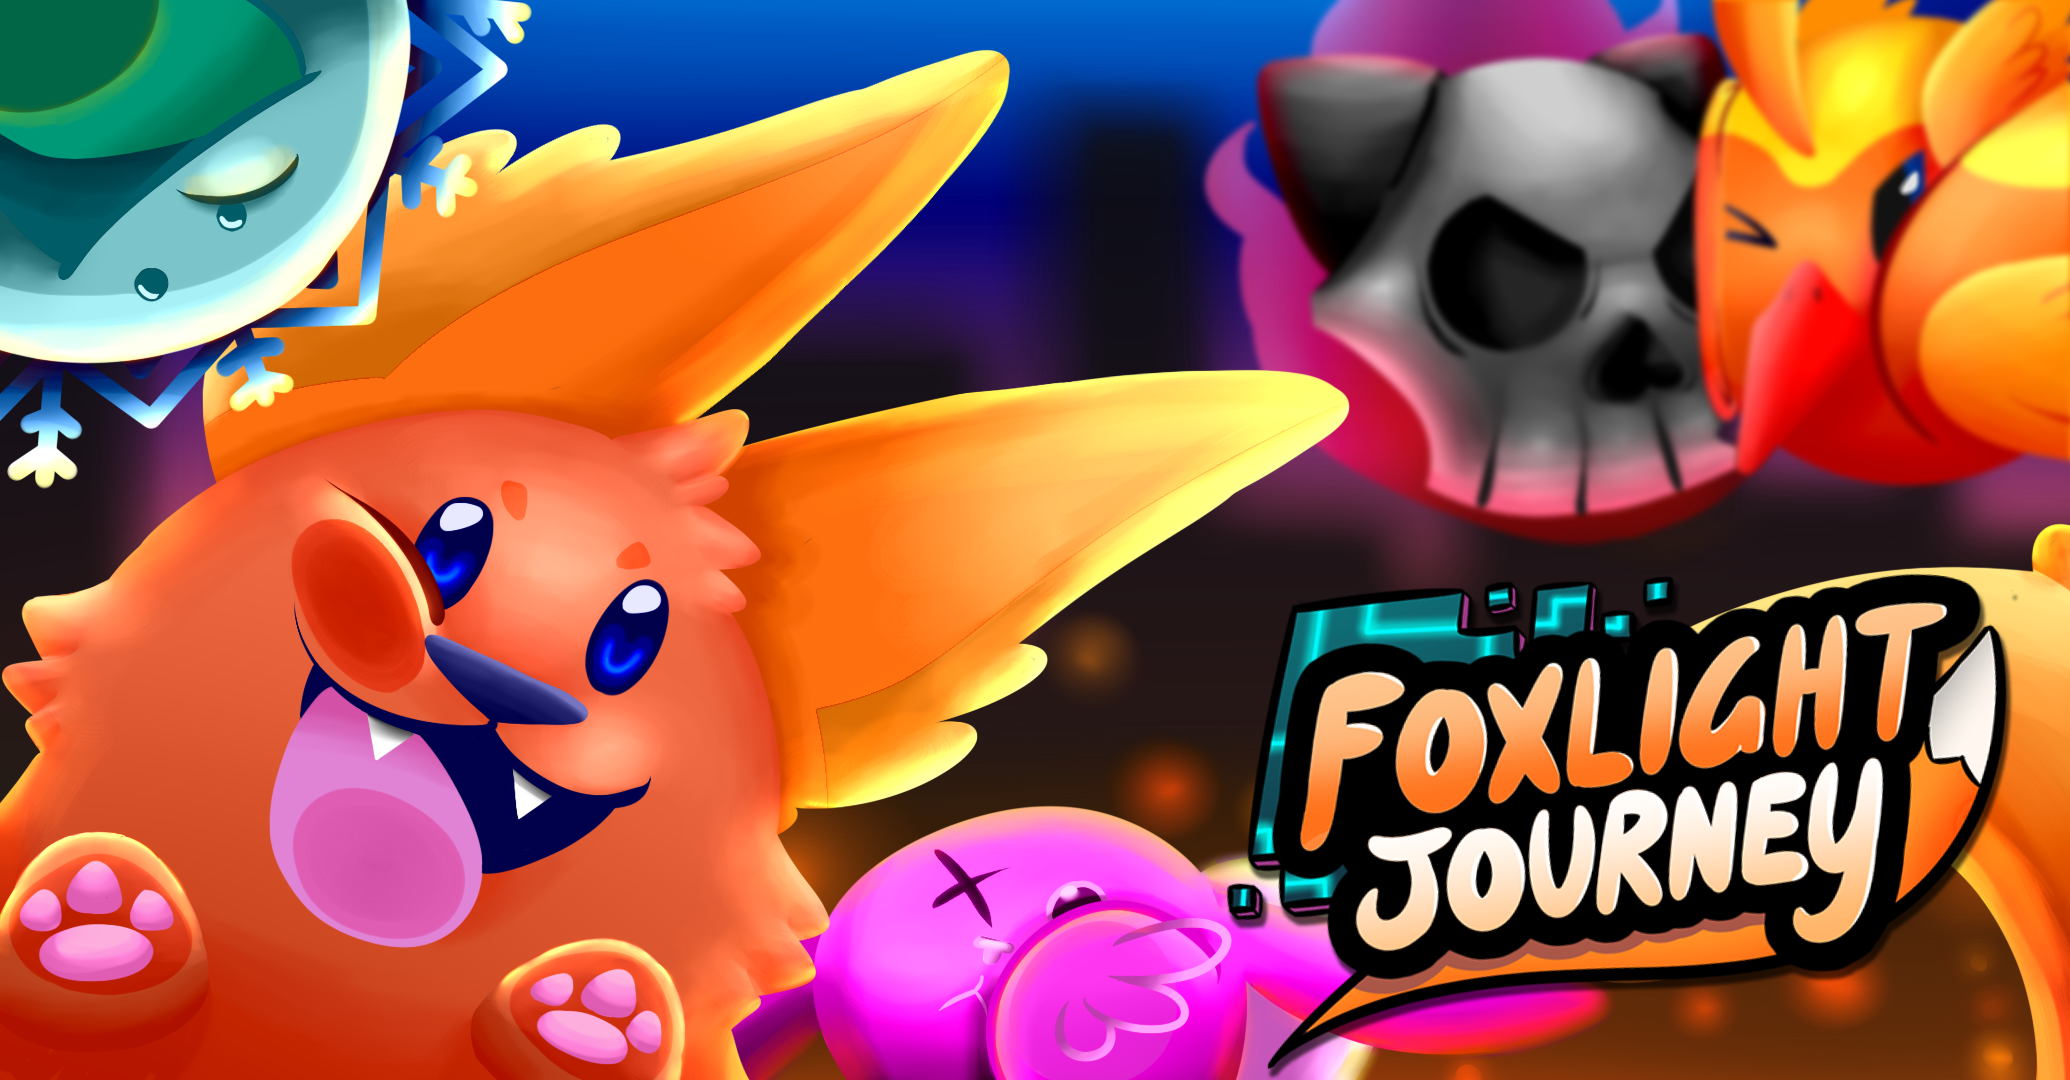 Foxlight Journey